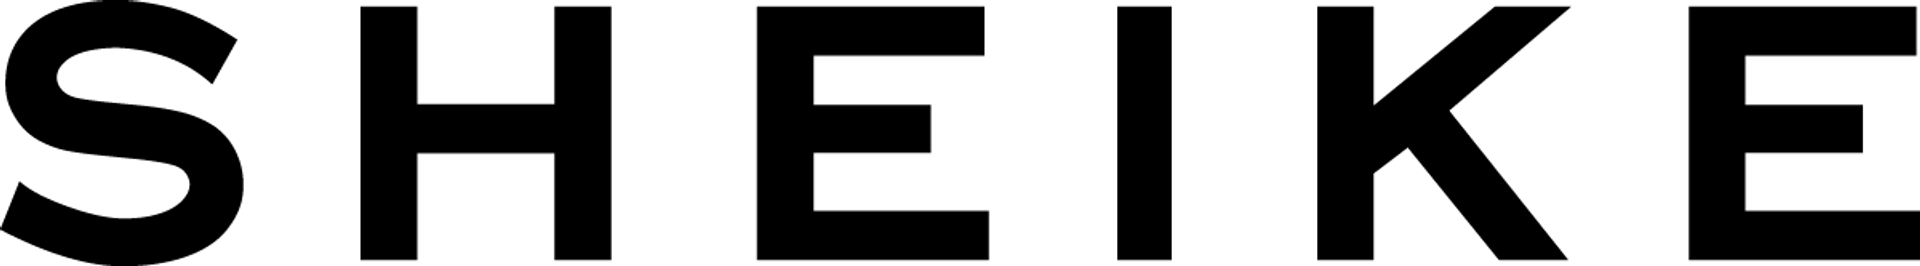 SHEIKE logo of current flyer